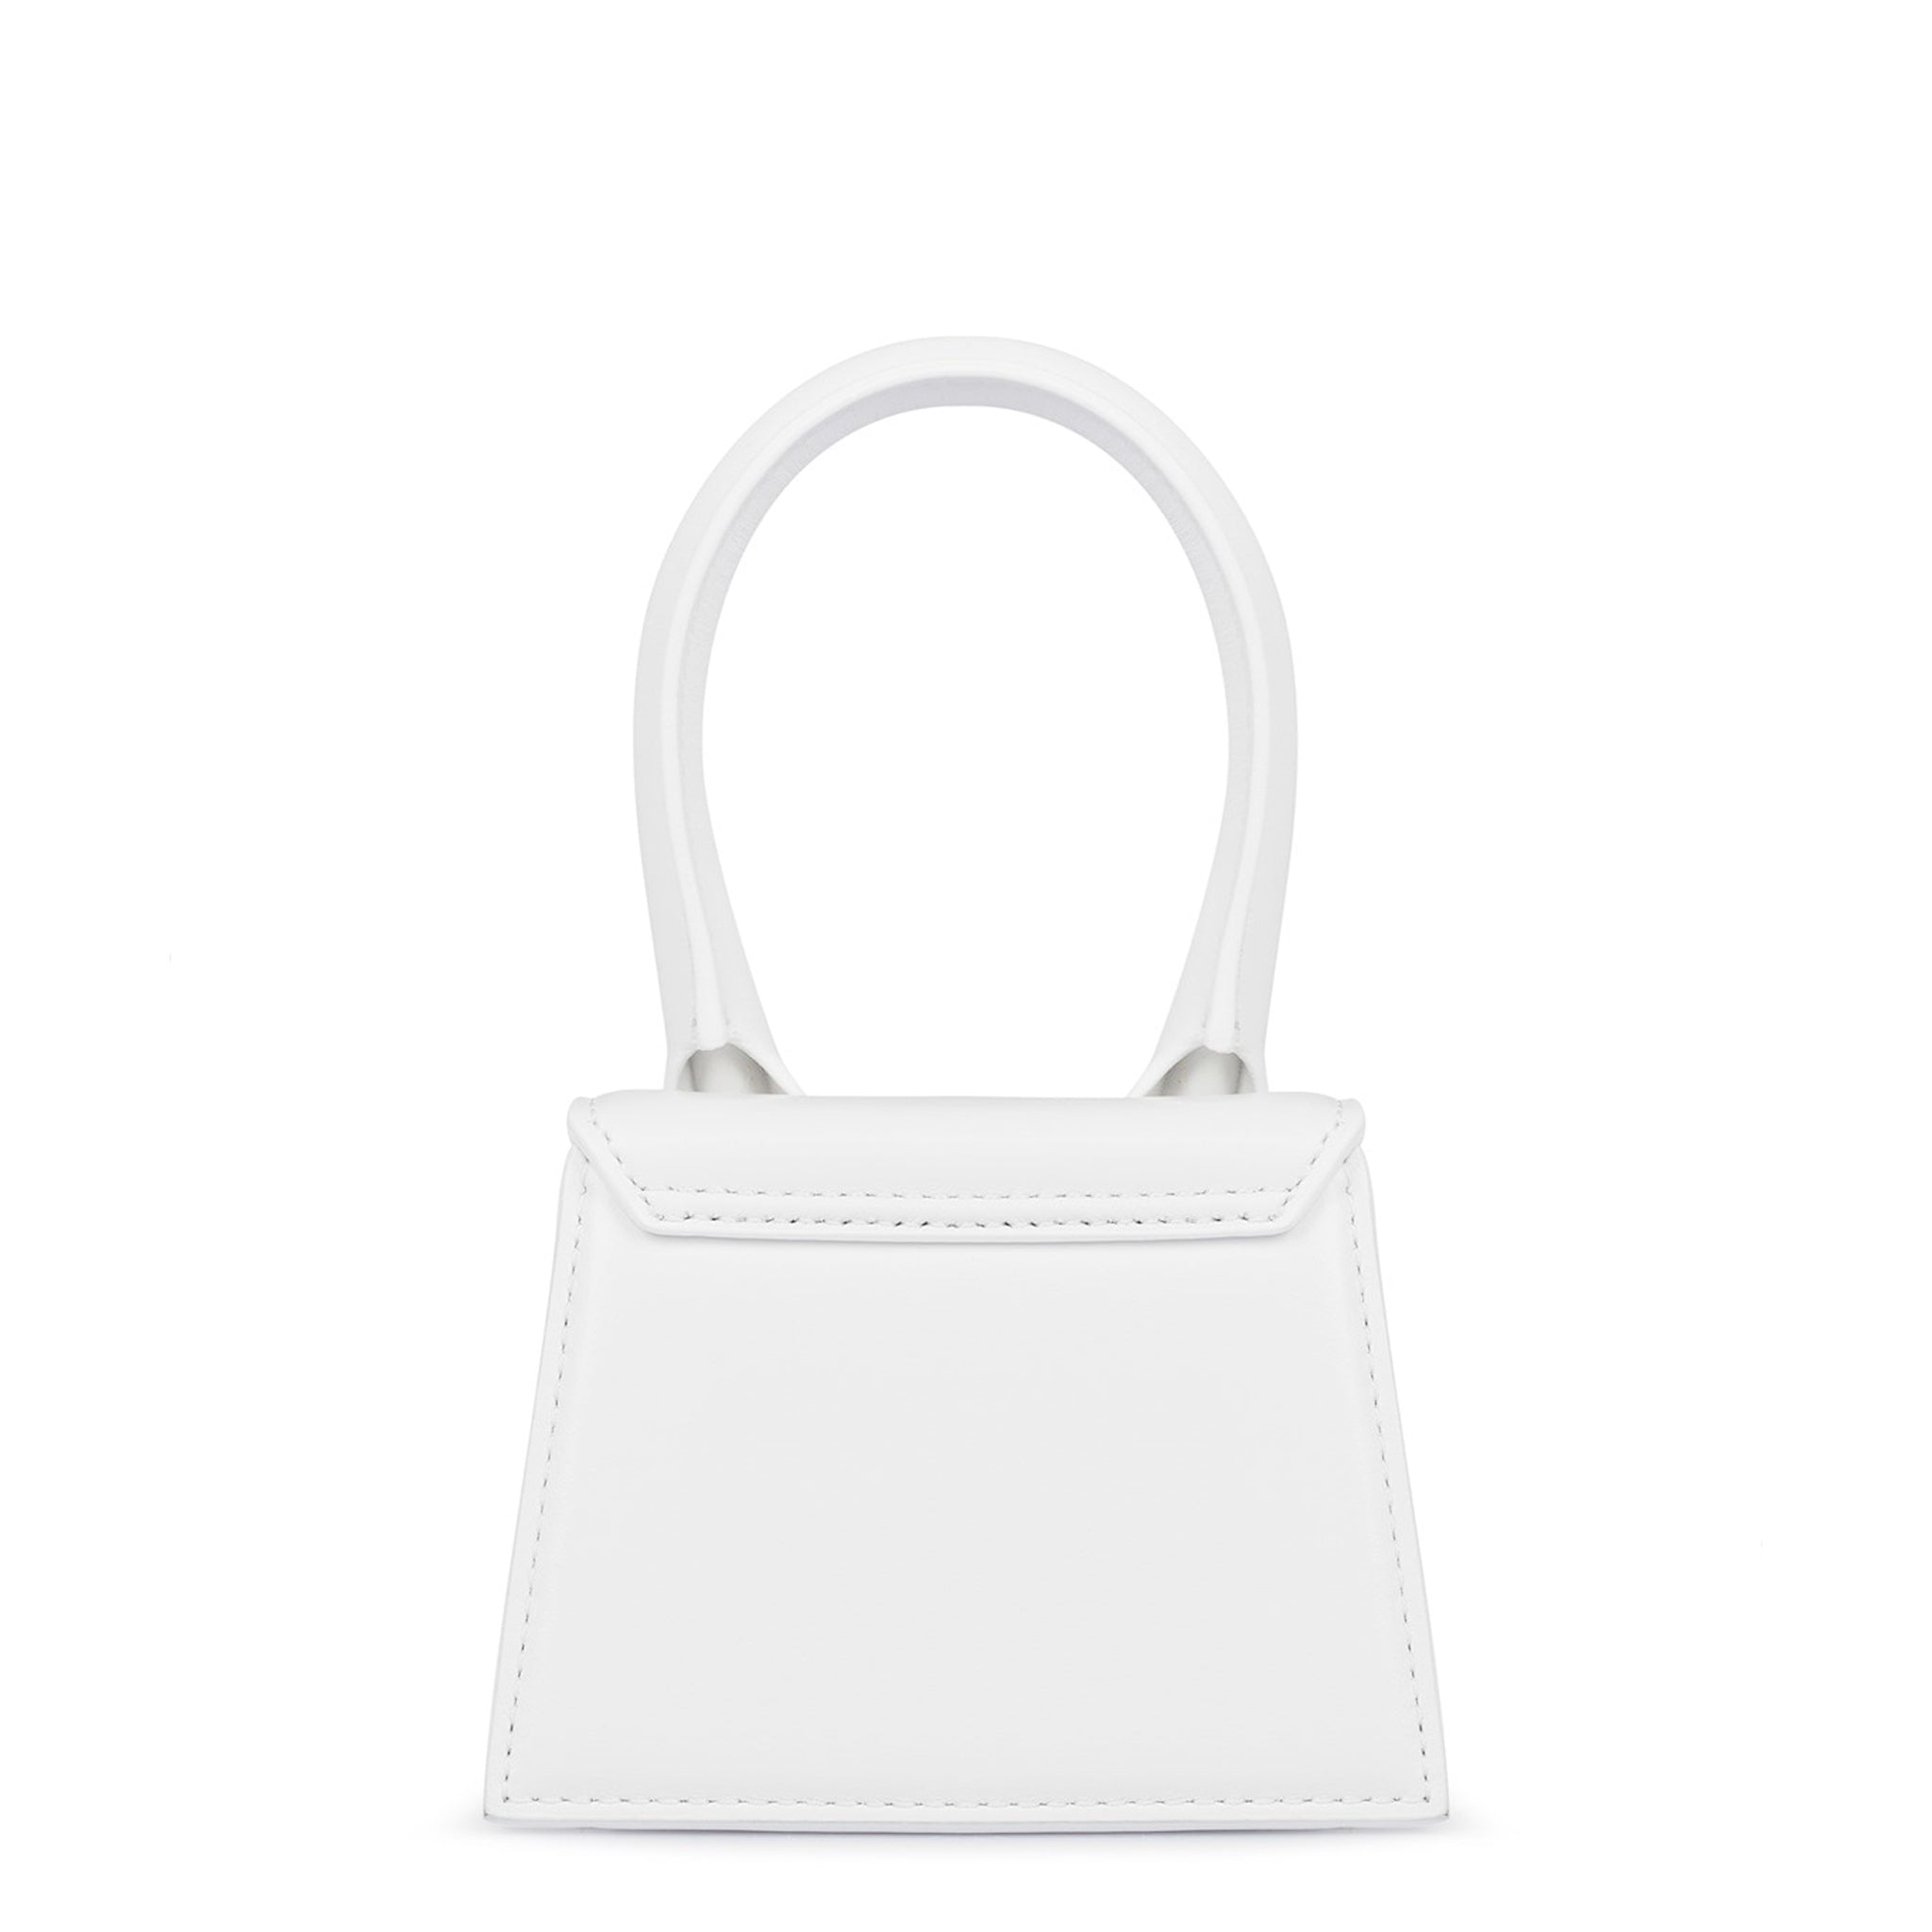 Image of Jacquemus Le Chiquito White Mini Leather Bag